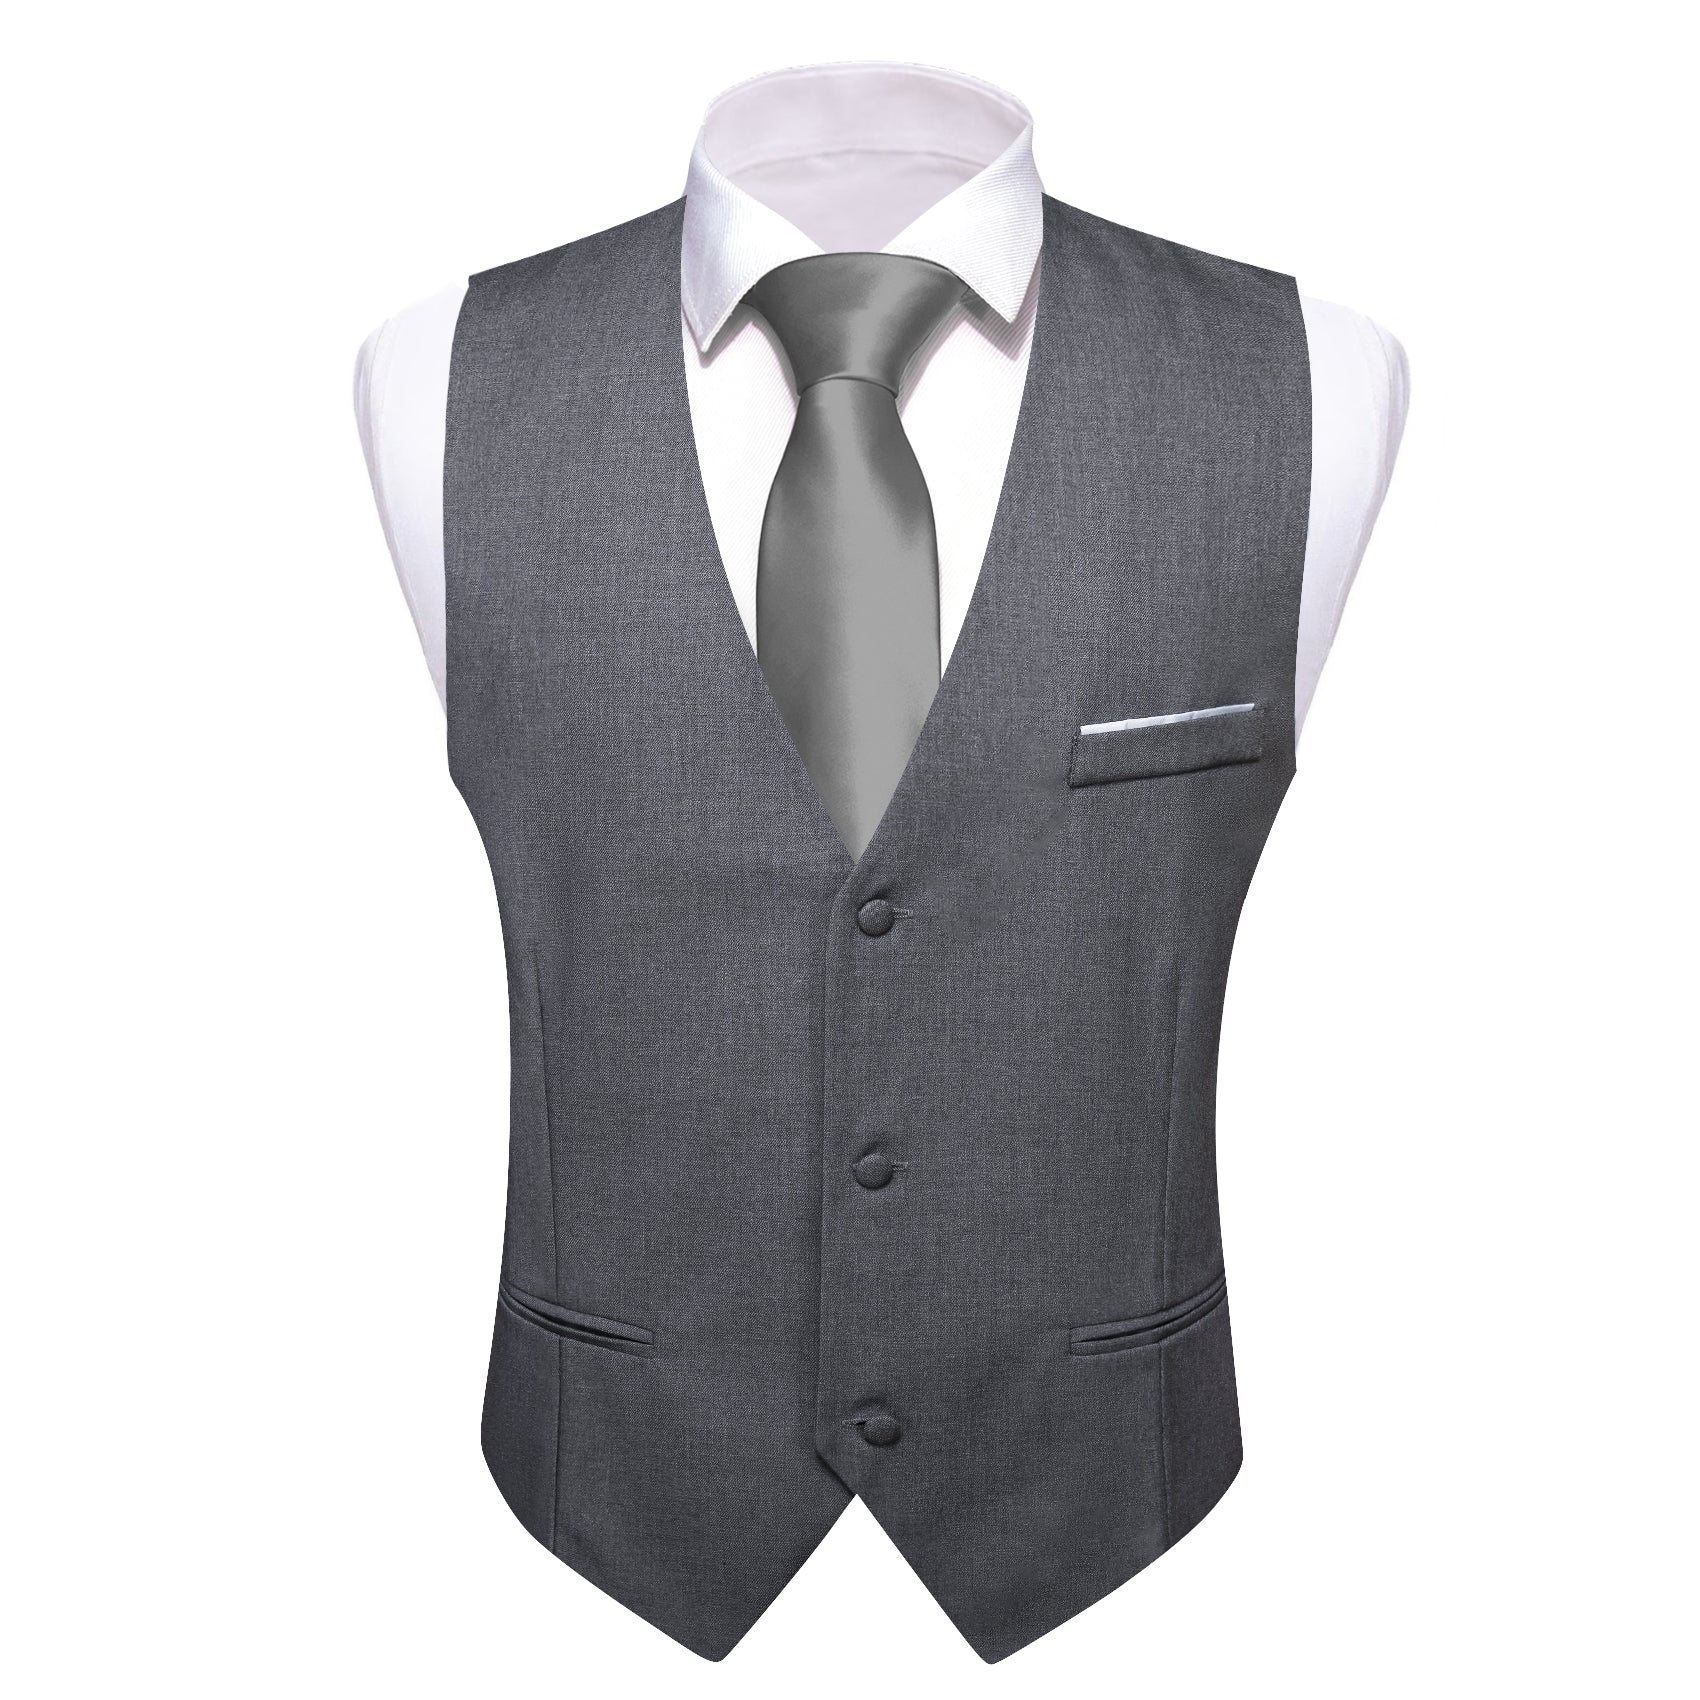 Barry.wang Men's Work Vest Grey Solid Business Vest Set Waistcoat Suit Set